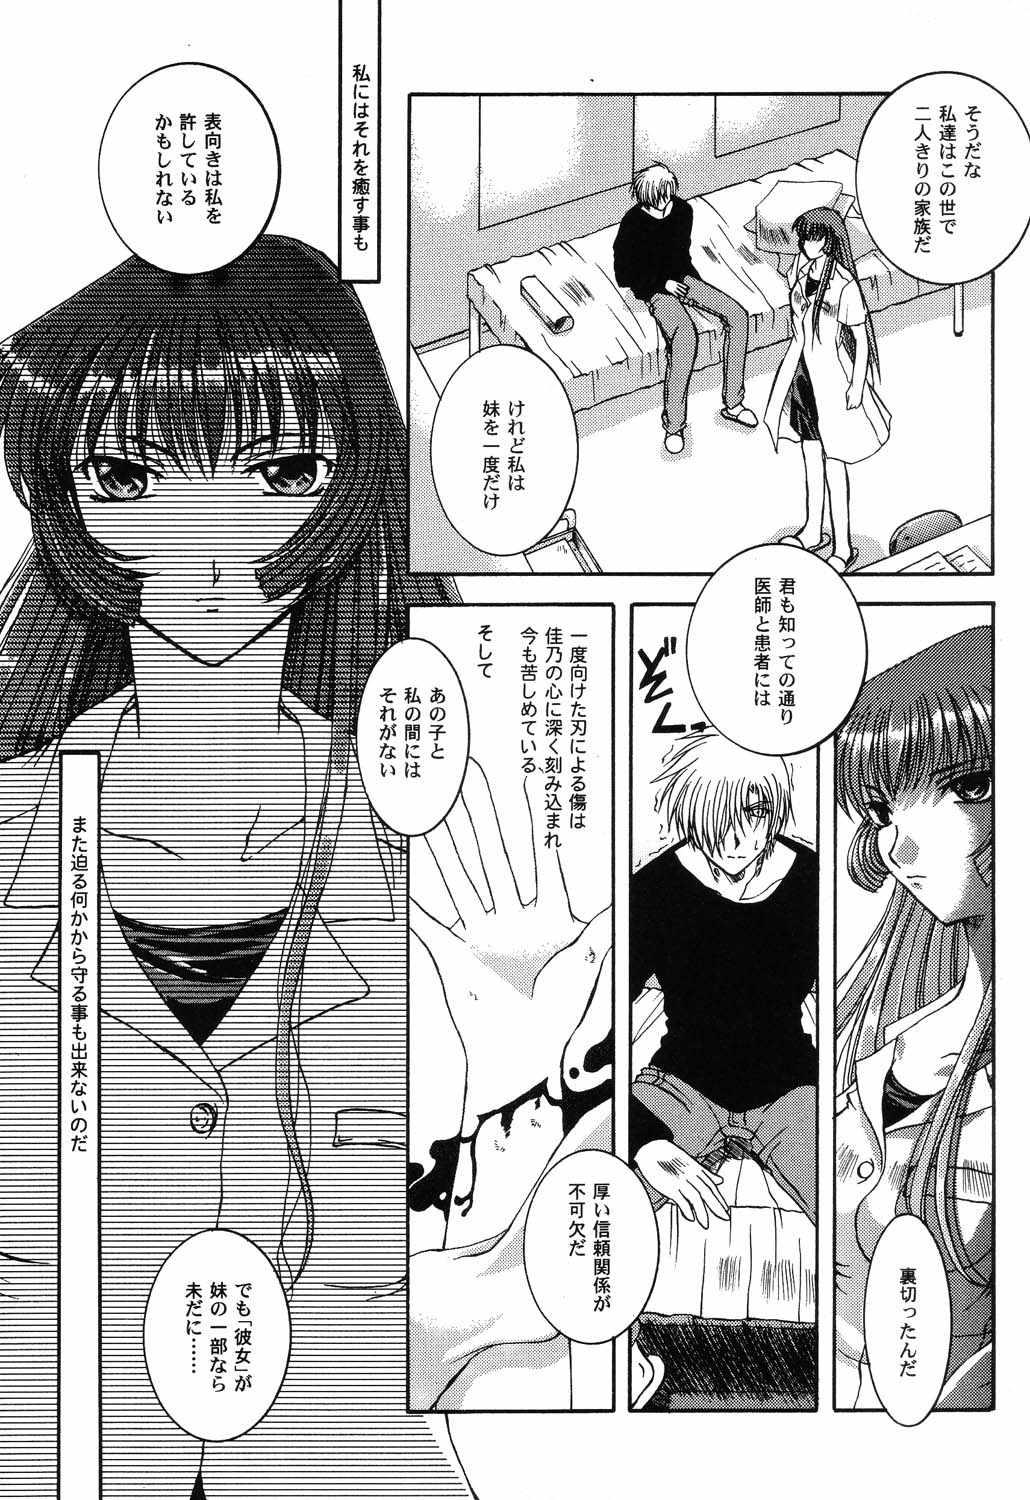 Teens Himitsu no Serenade 3 - Kanon Air Adorable - Page 10